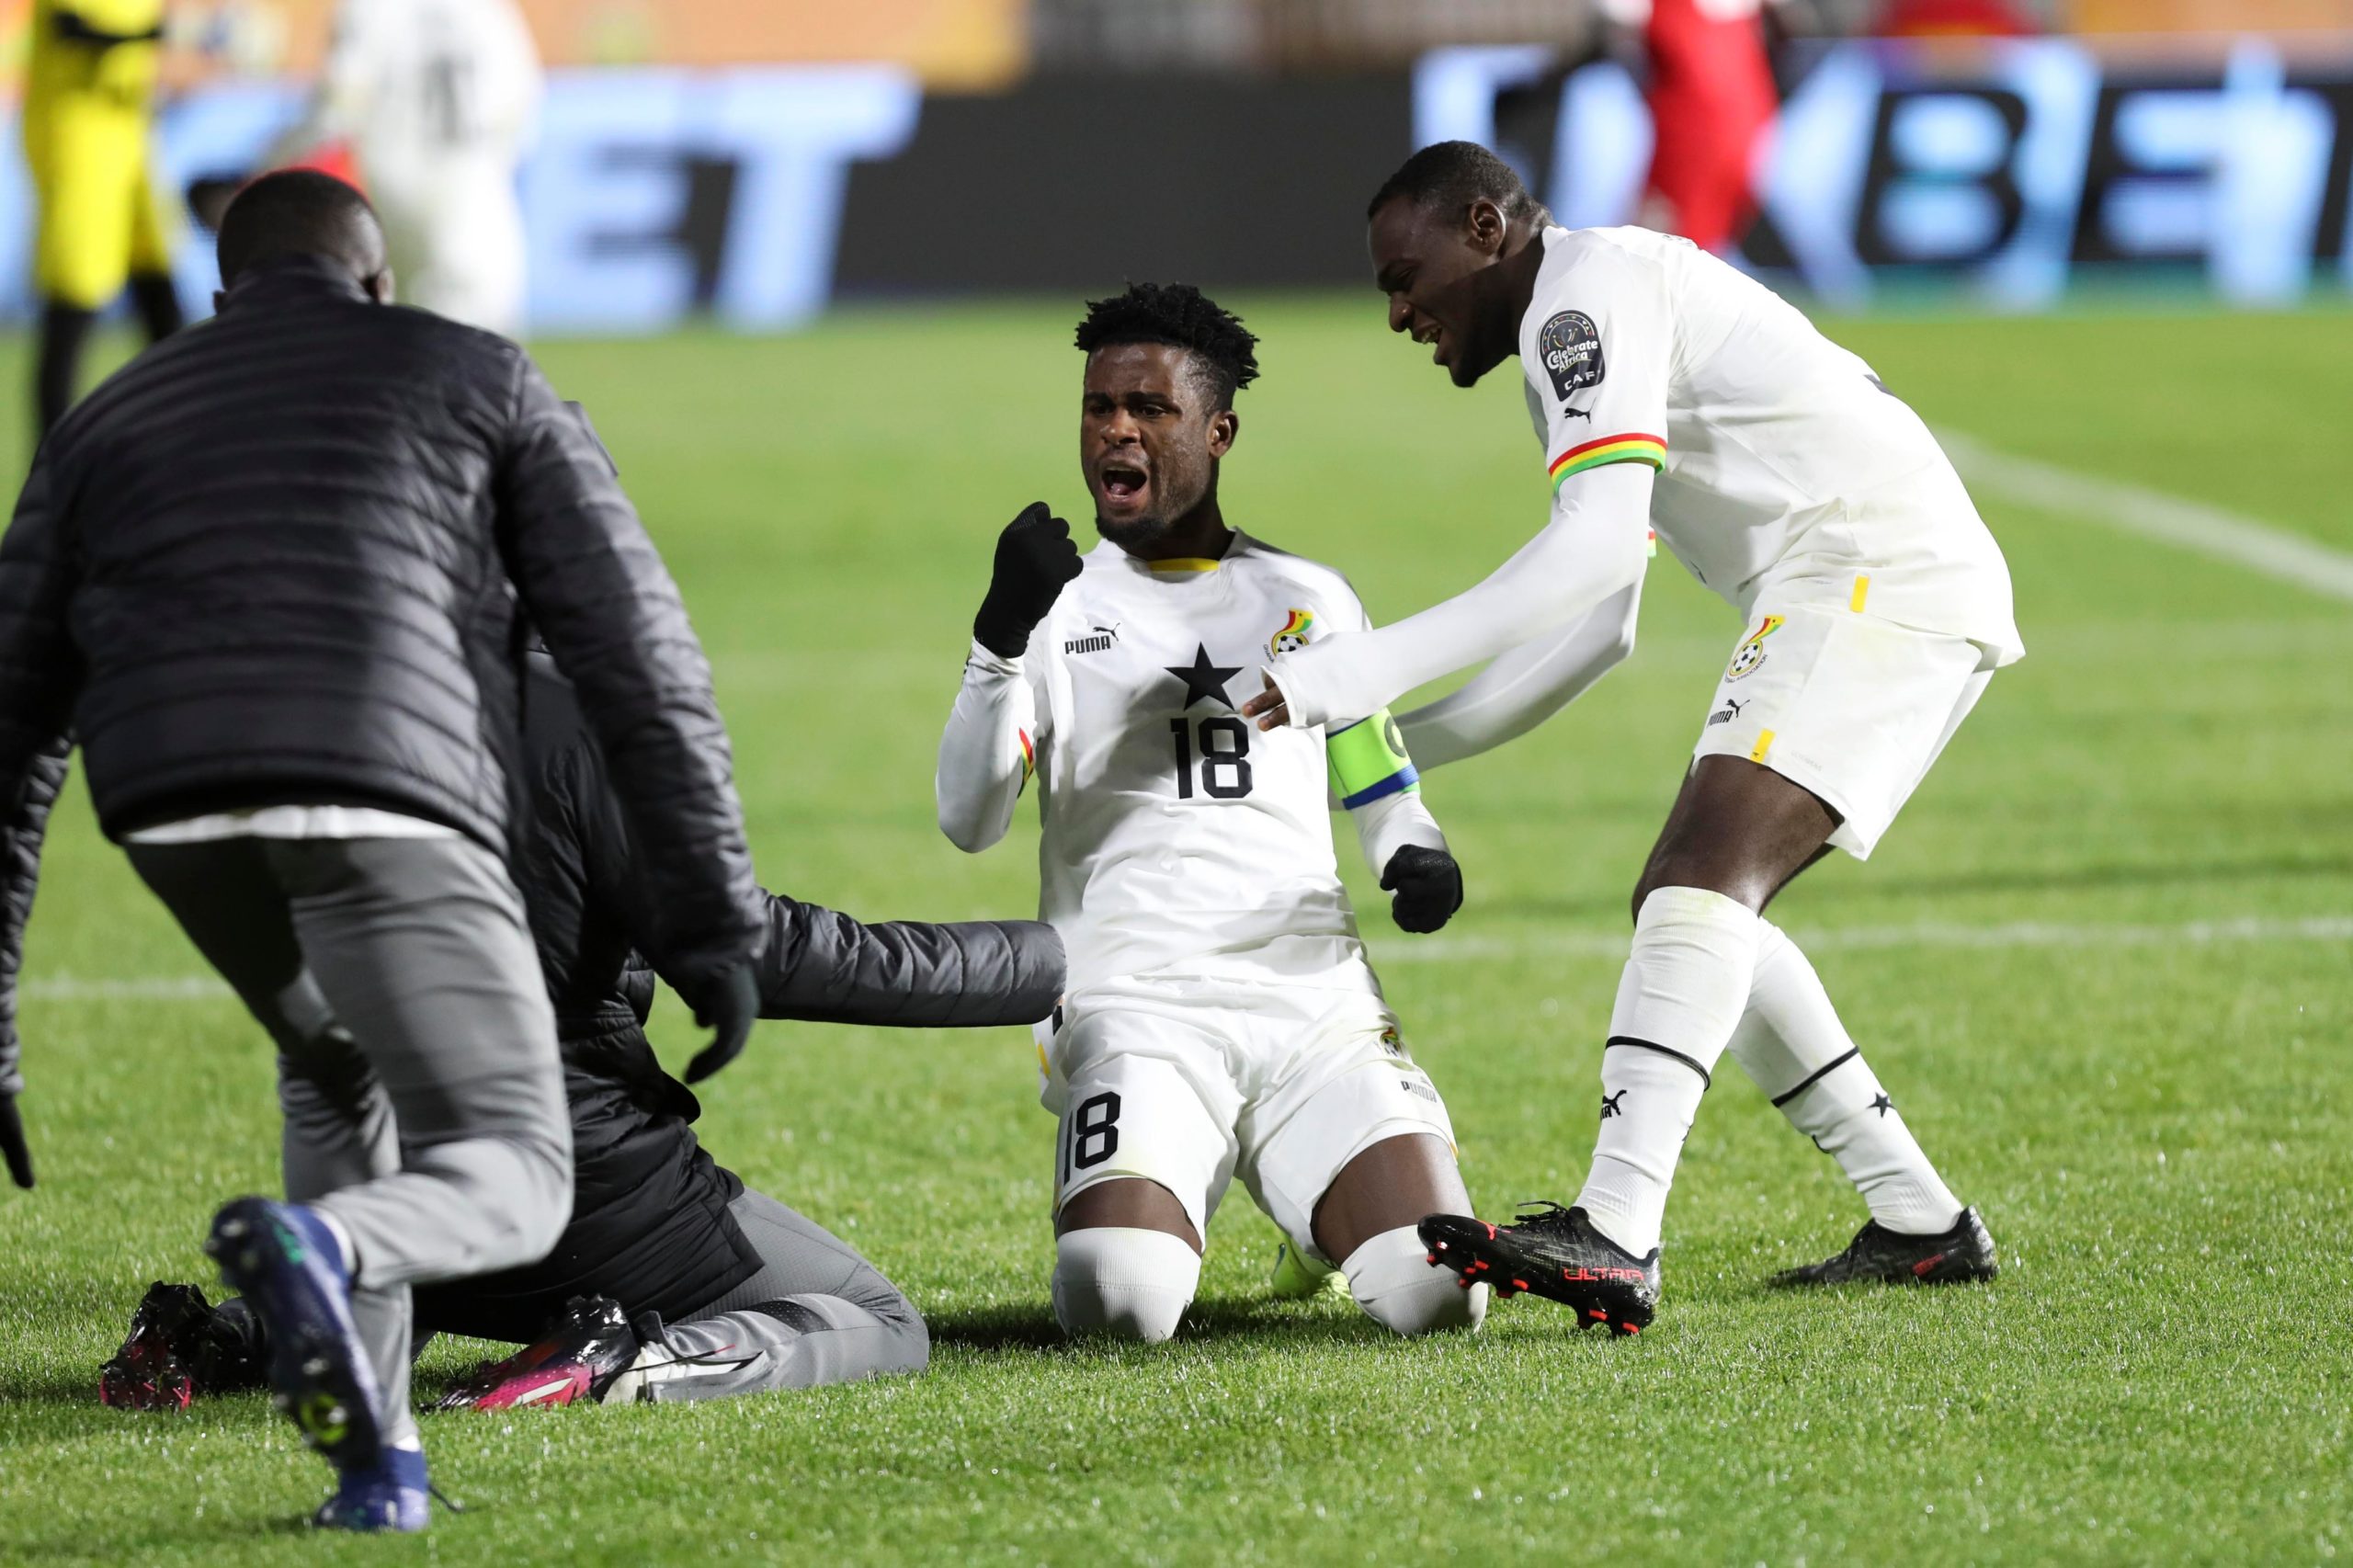 CHAN 2022: Ghana’s quarterfinal qualification confirmed after Madagascar beat Sudan